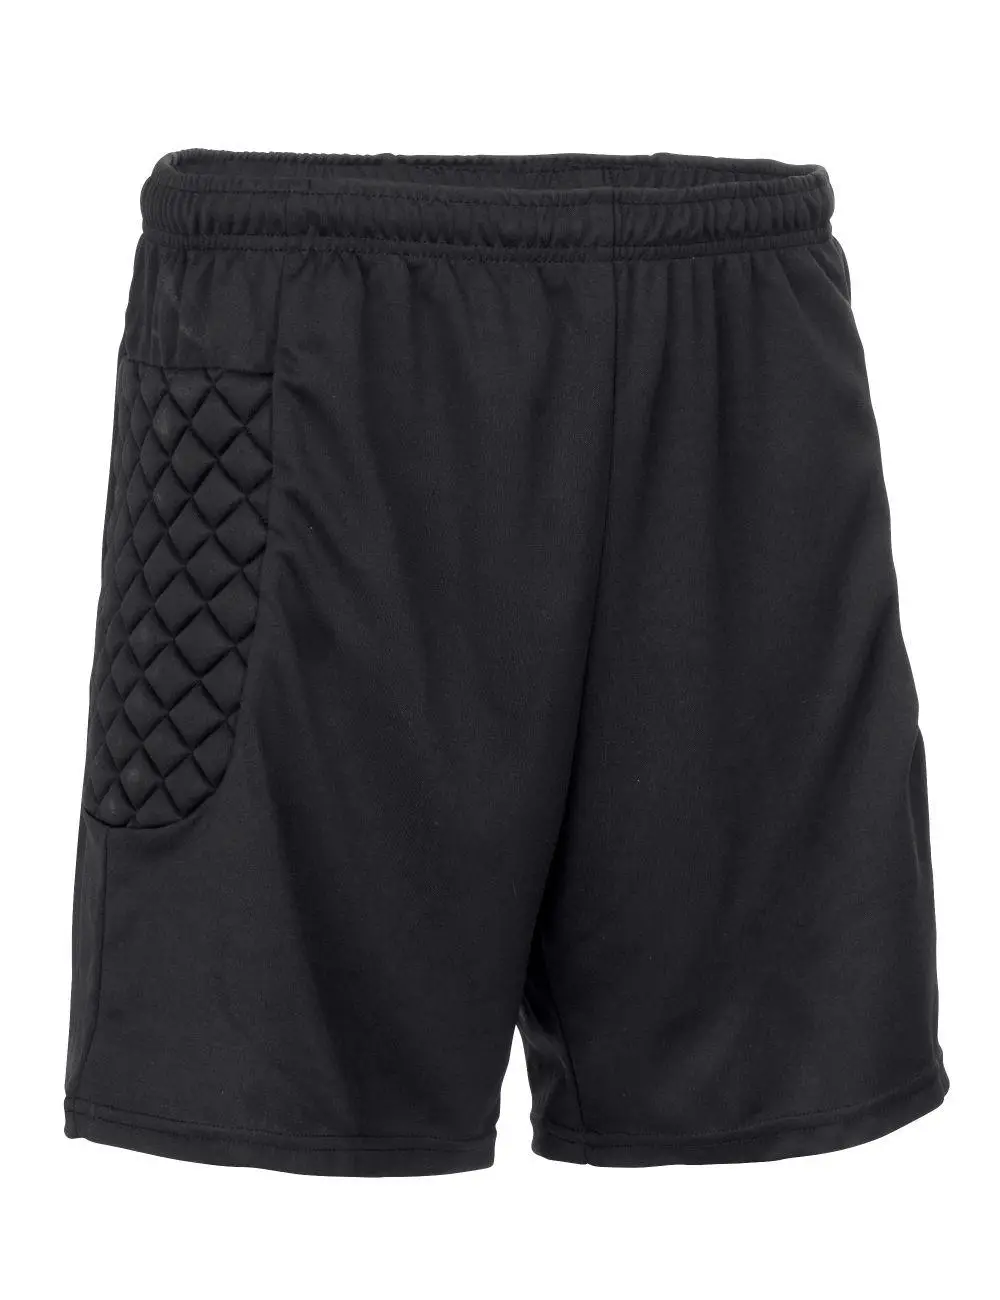 Вратарские шорты SELECT Madrid goalkeepers shorts (football)  чорний, S фото товара